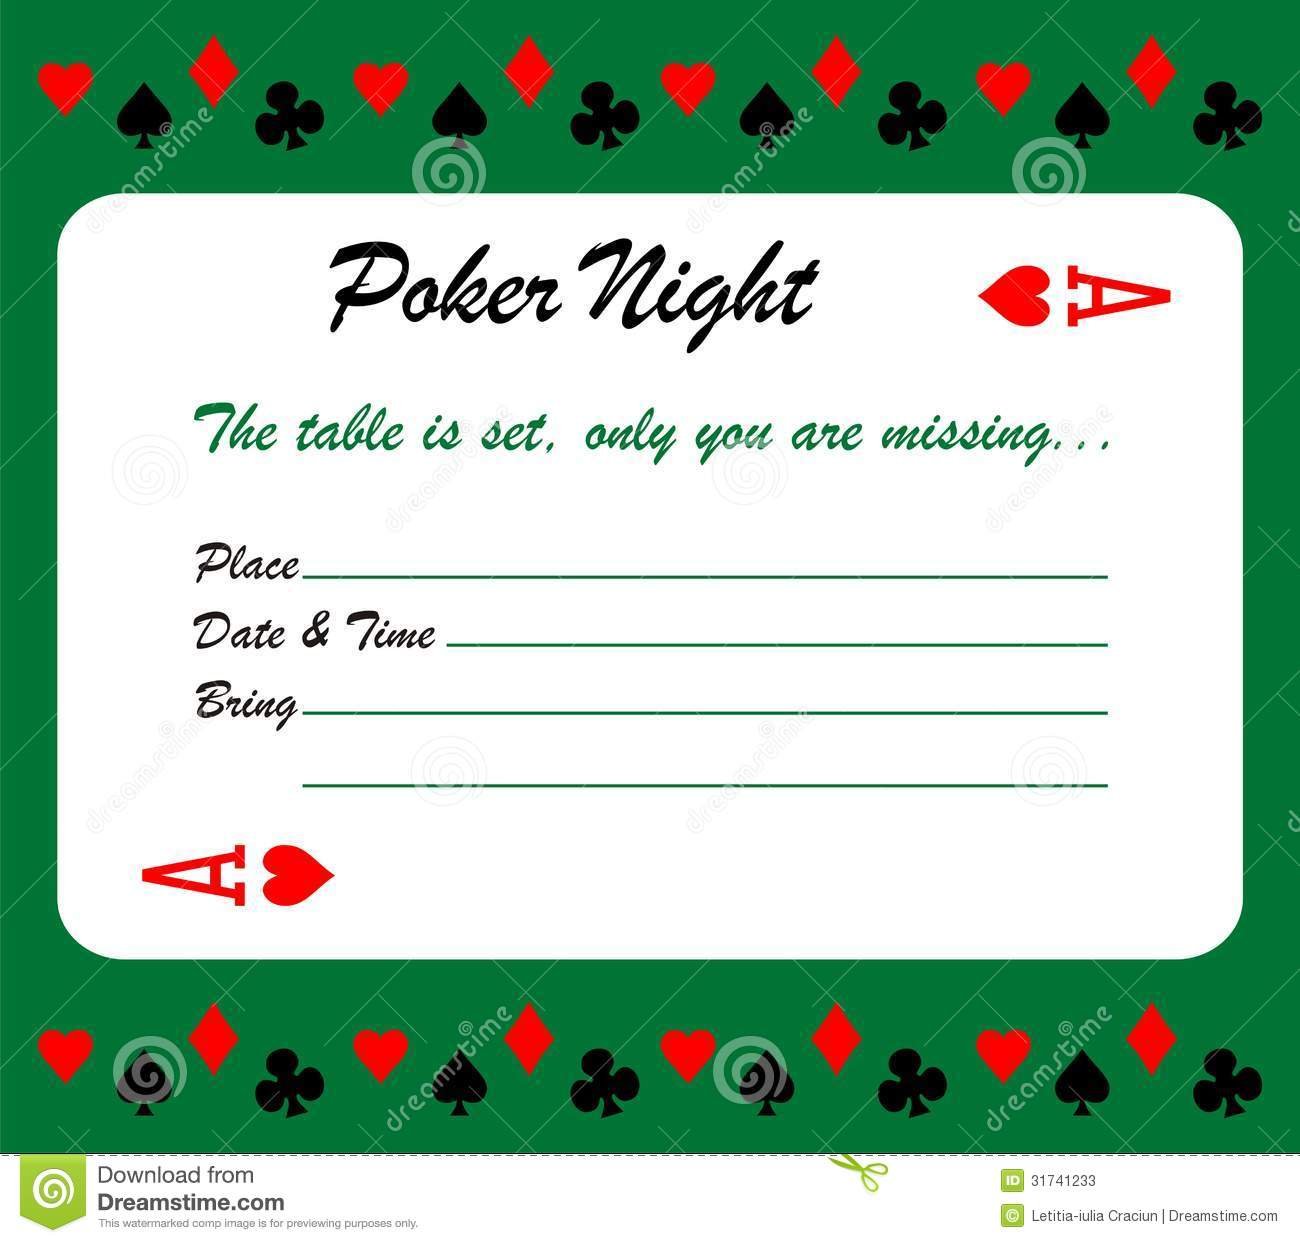 Poker Night Invitation Card Stock Photos